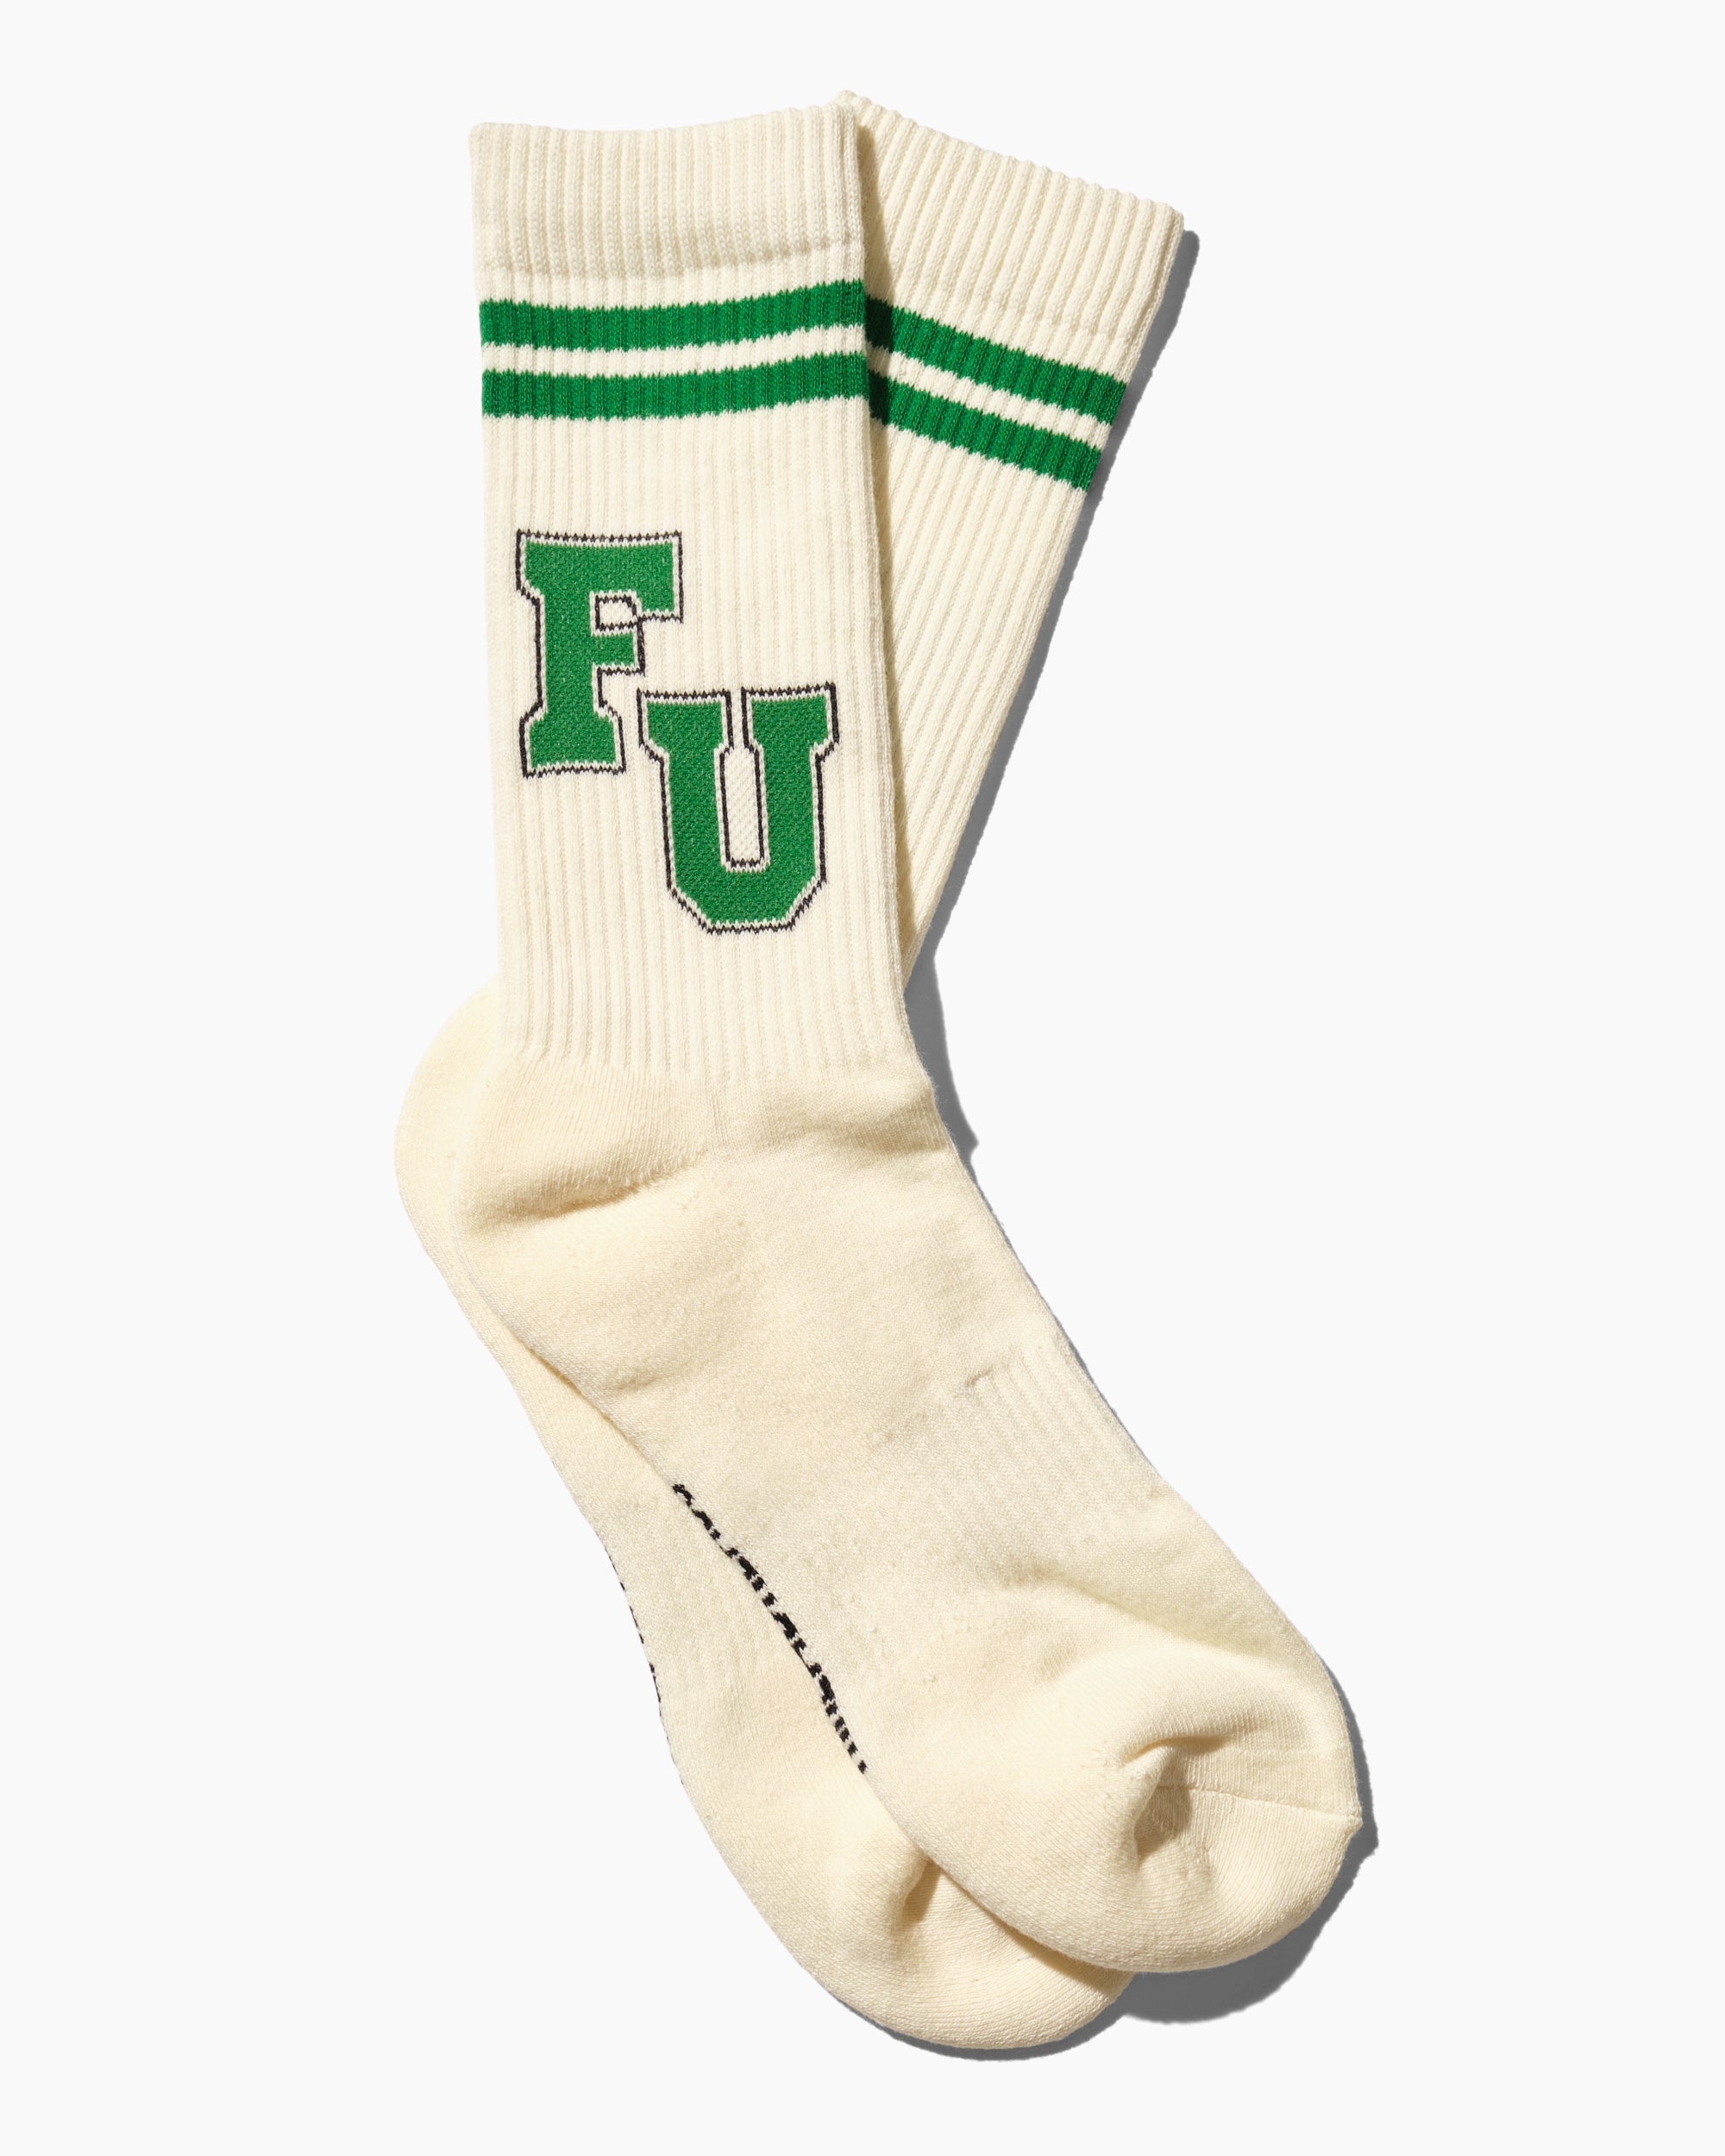 FU Socks